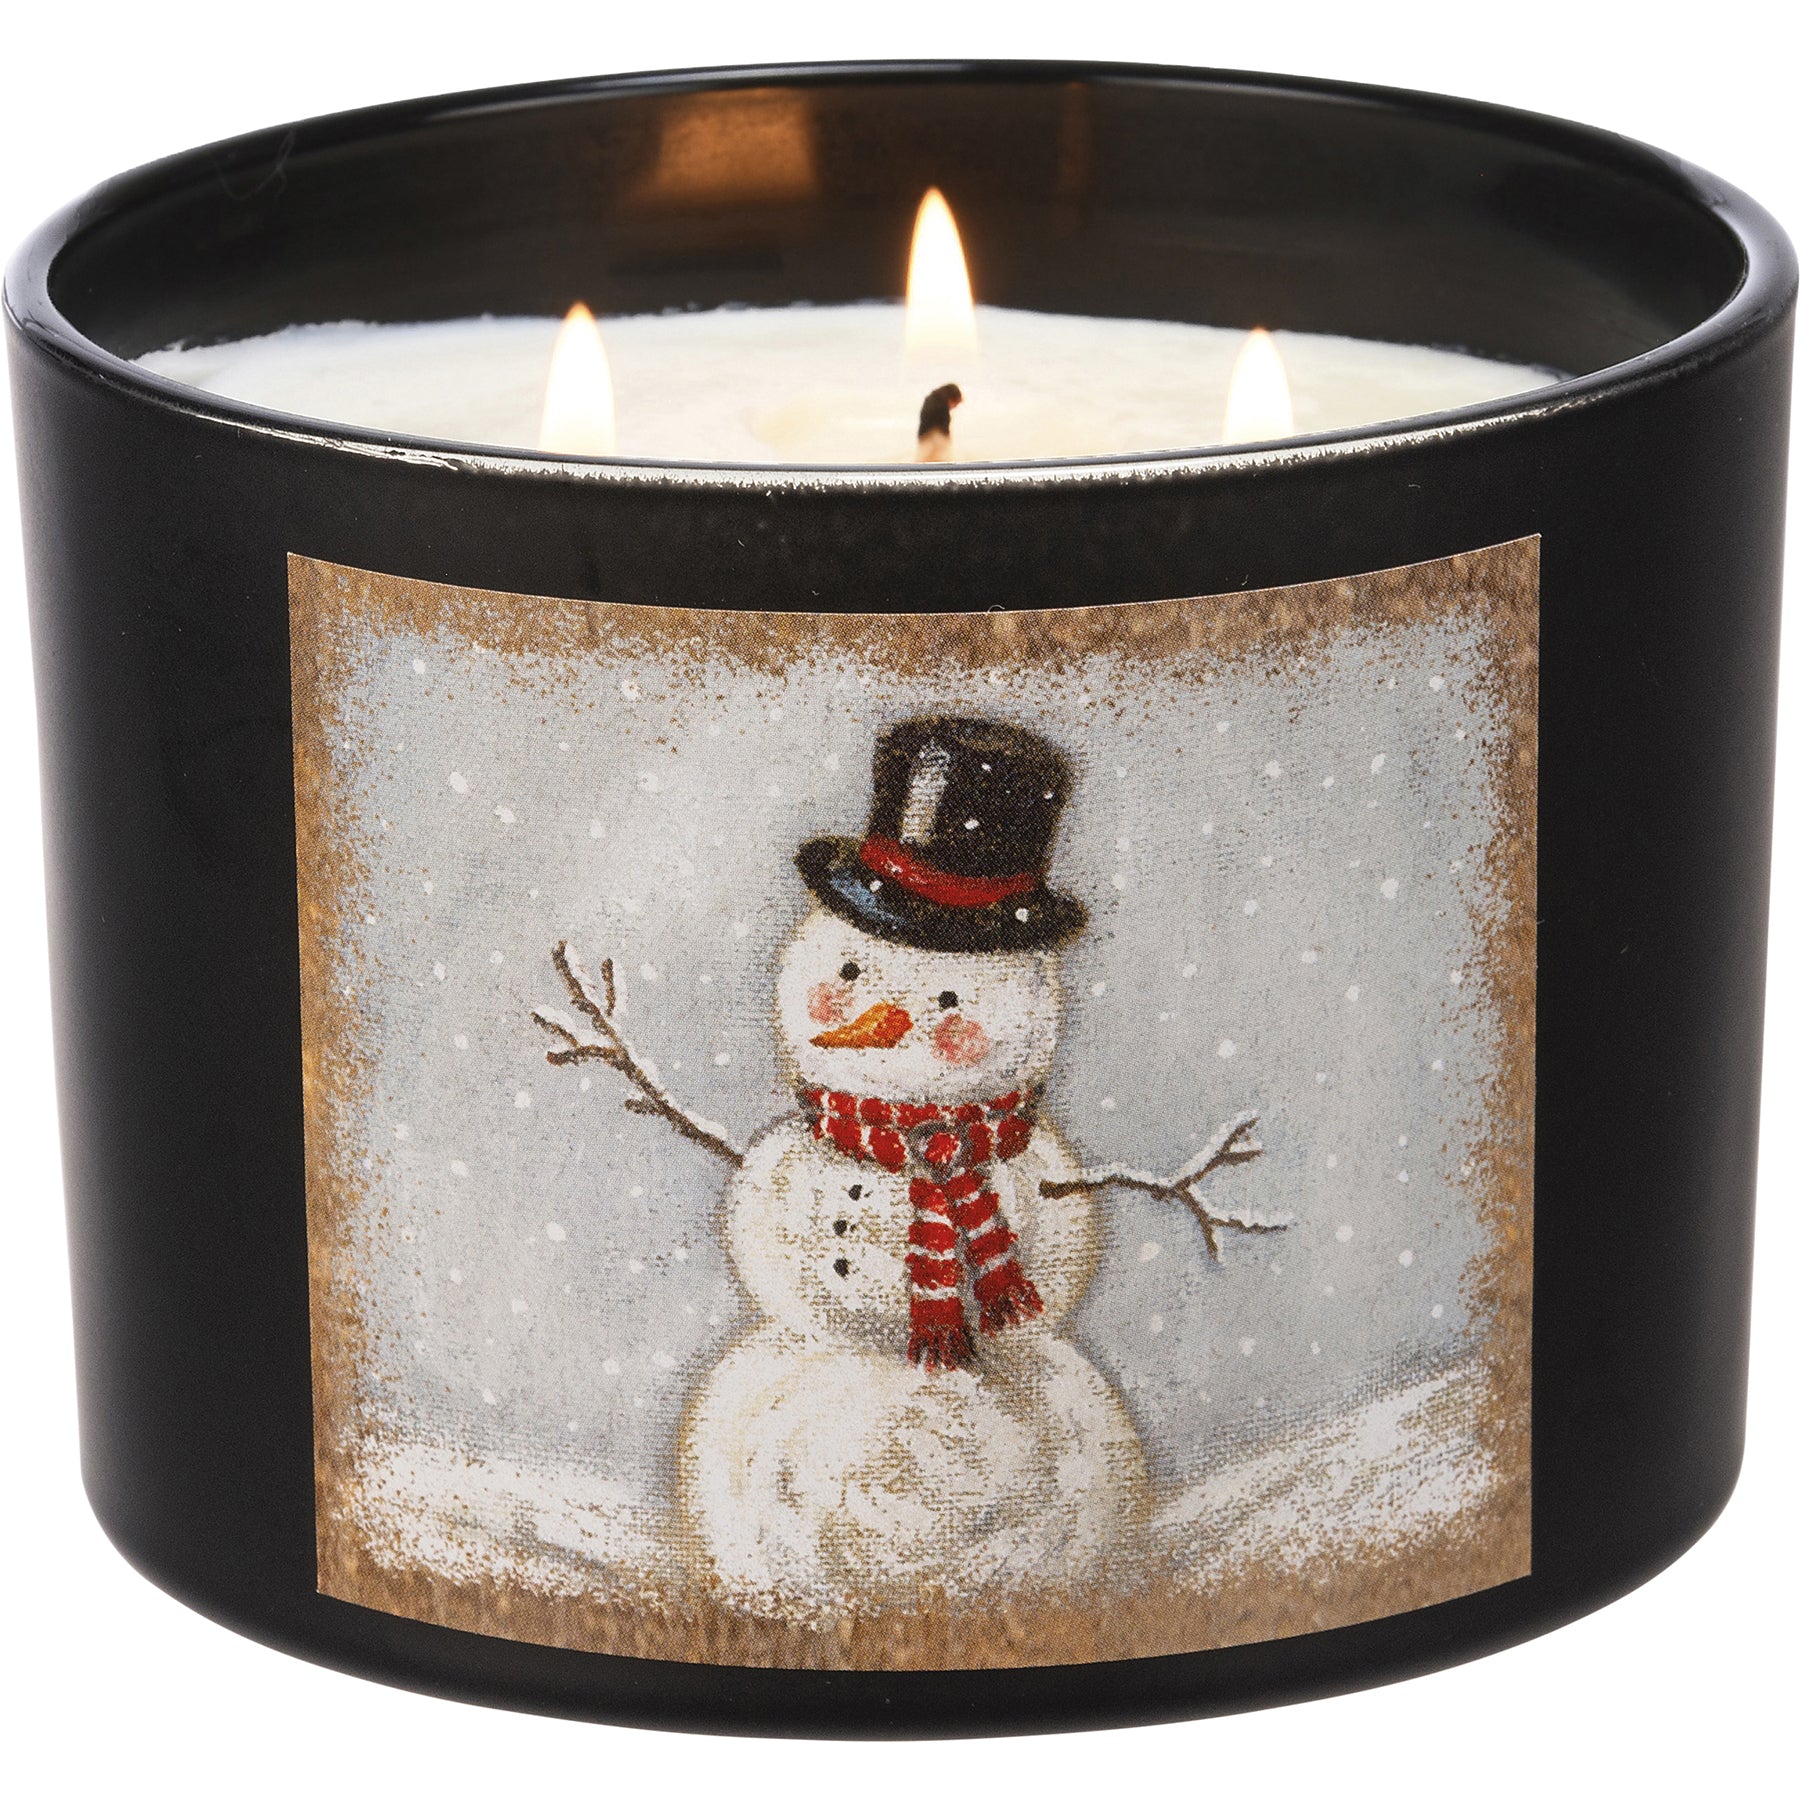 14 oz Snowman Christmas Candle Sugar Cookie Scent - C